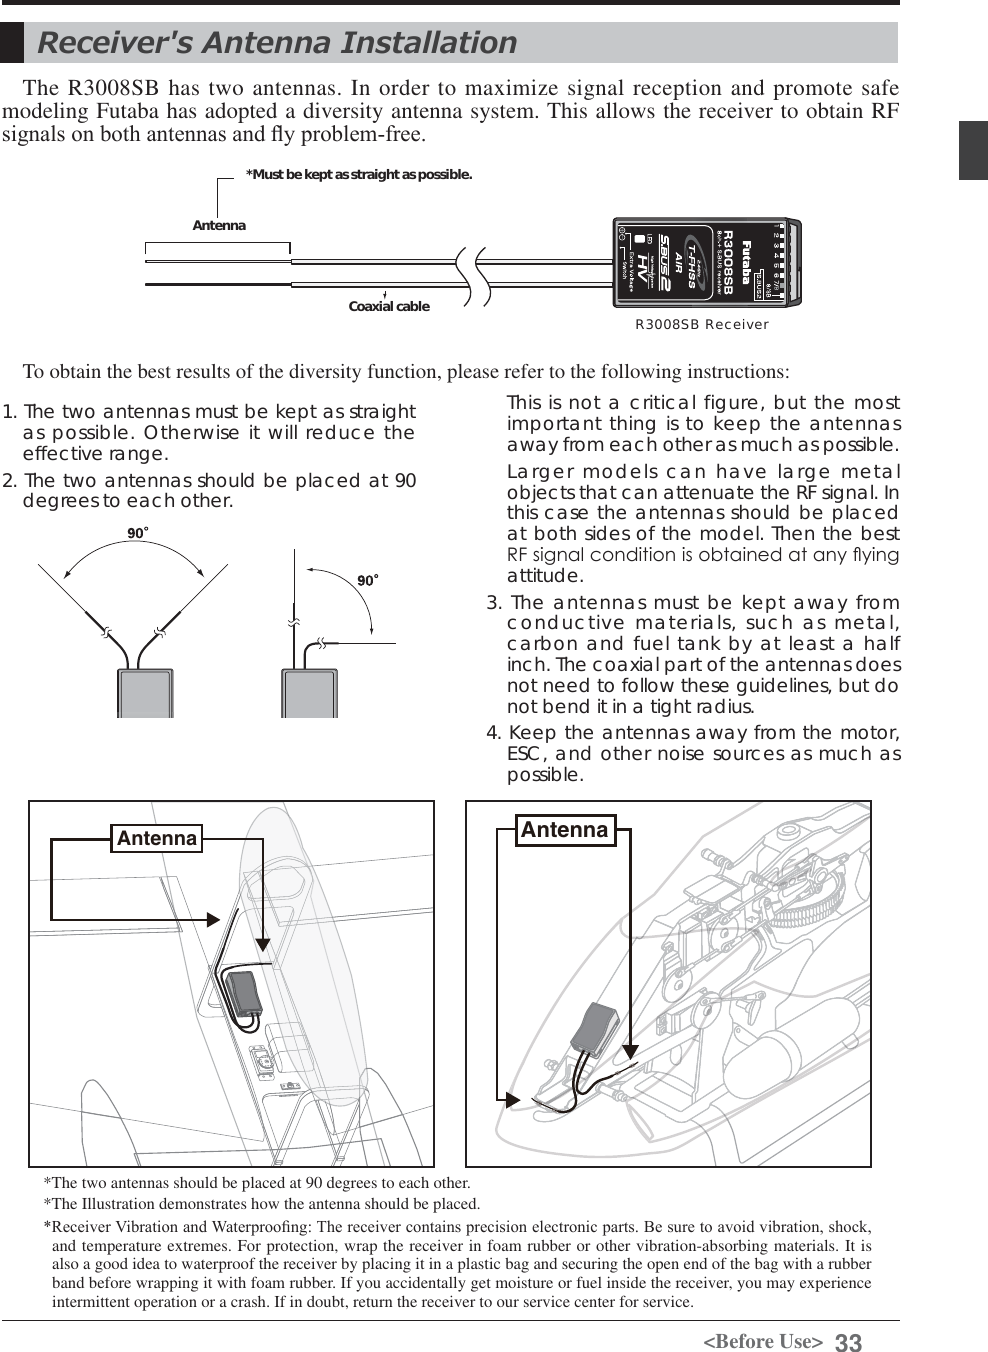 Page 33 of Futaba T12K-24G Radio Control User Manual 